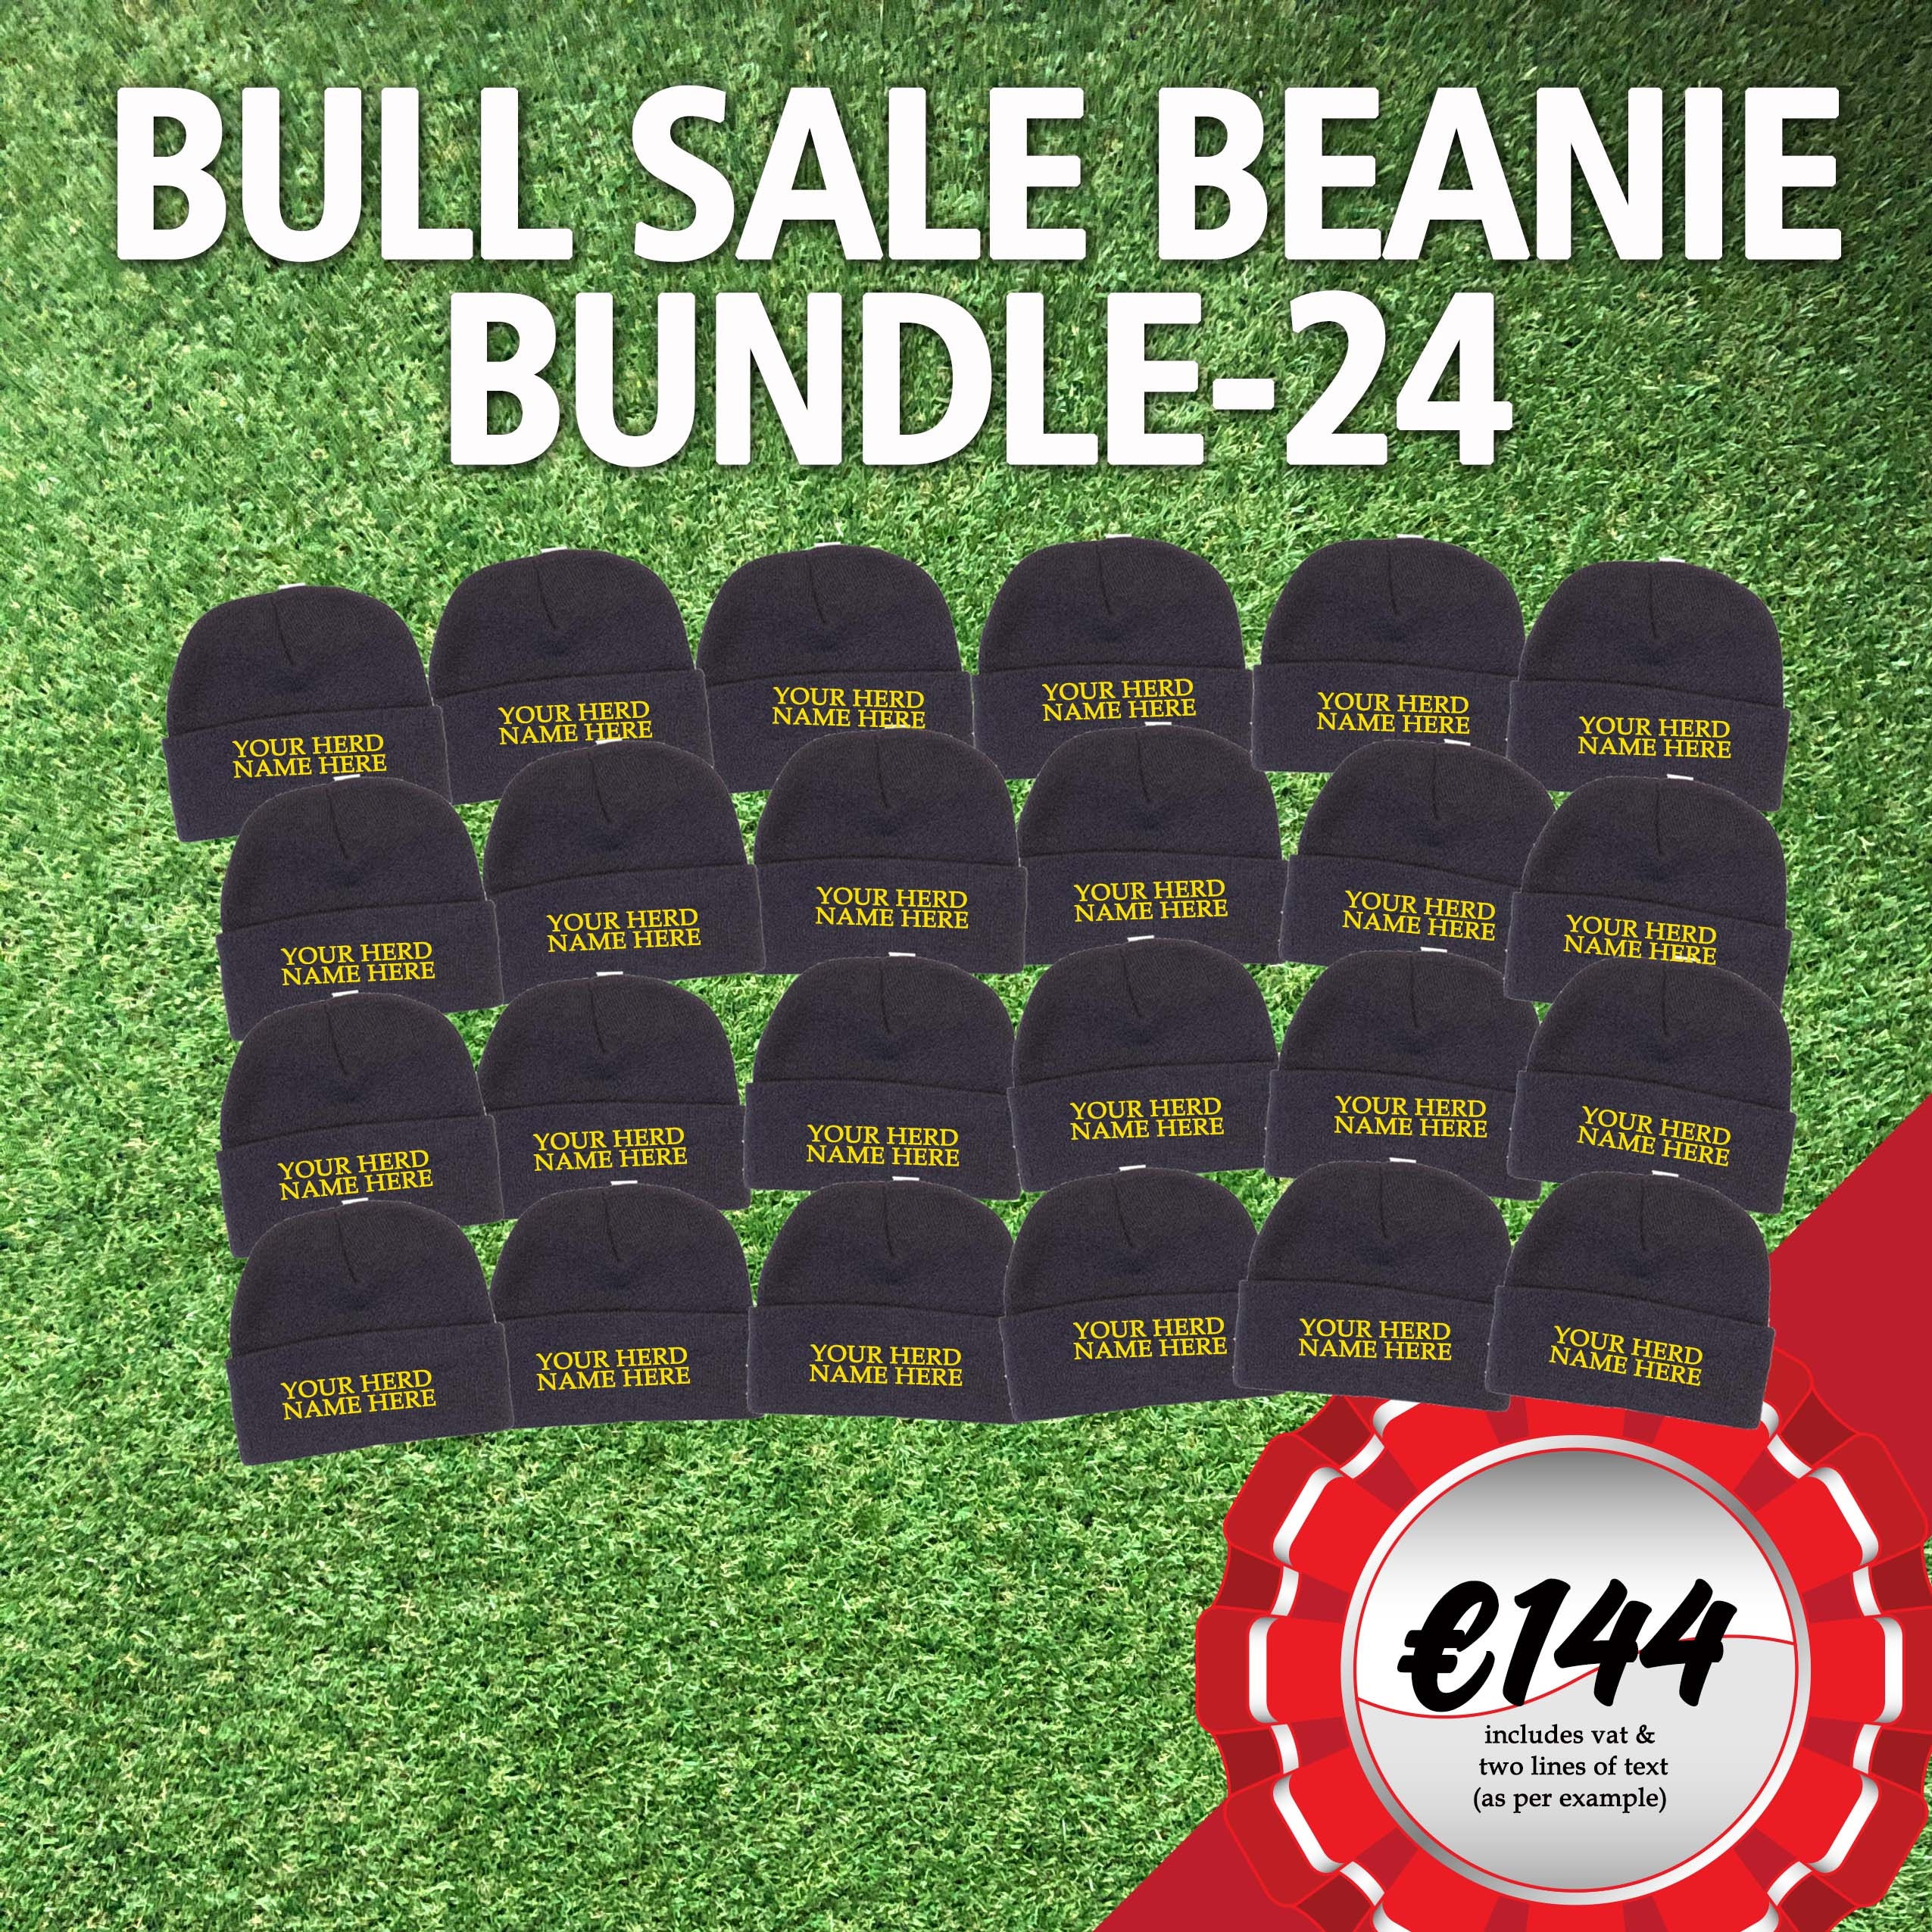 products-bull_sale_bundles-pens_beanies24